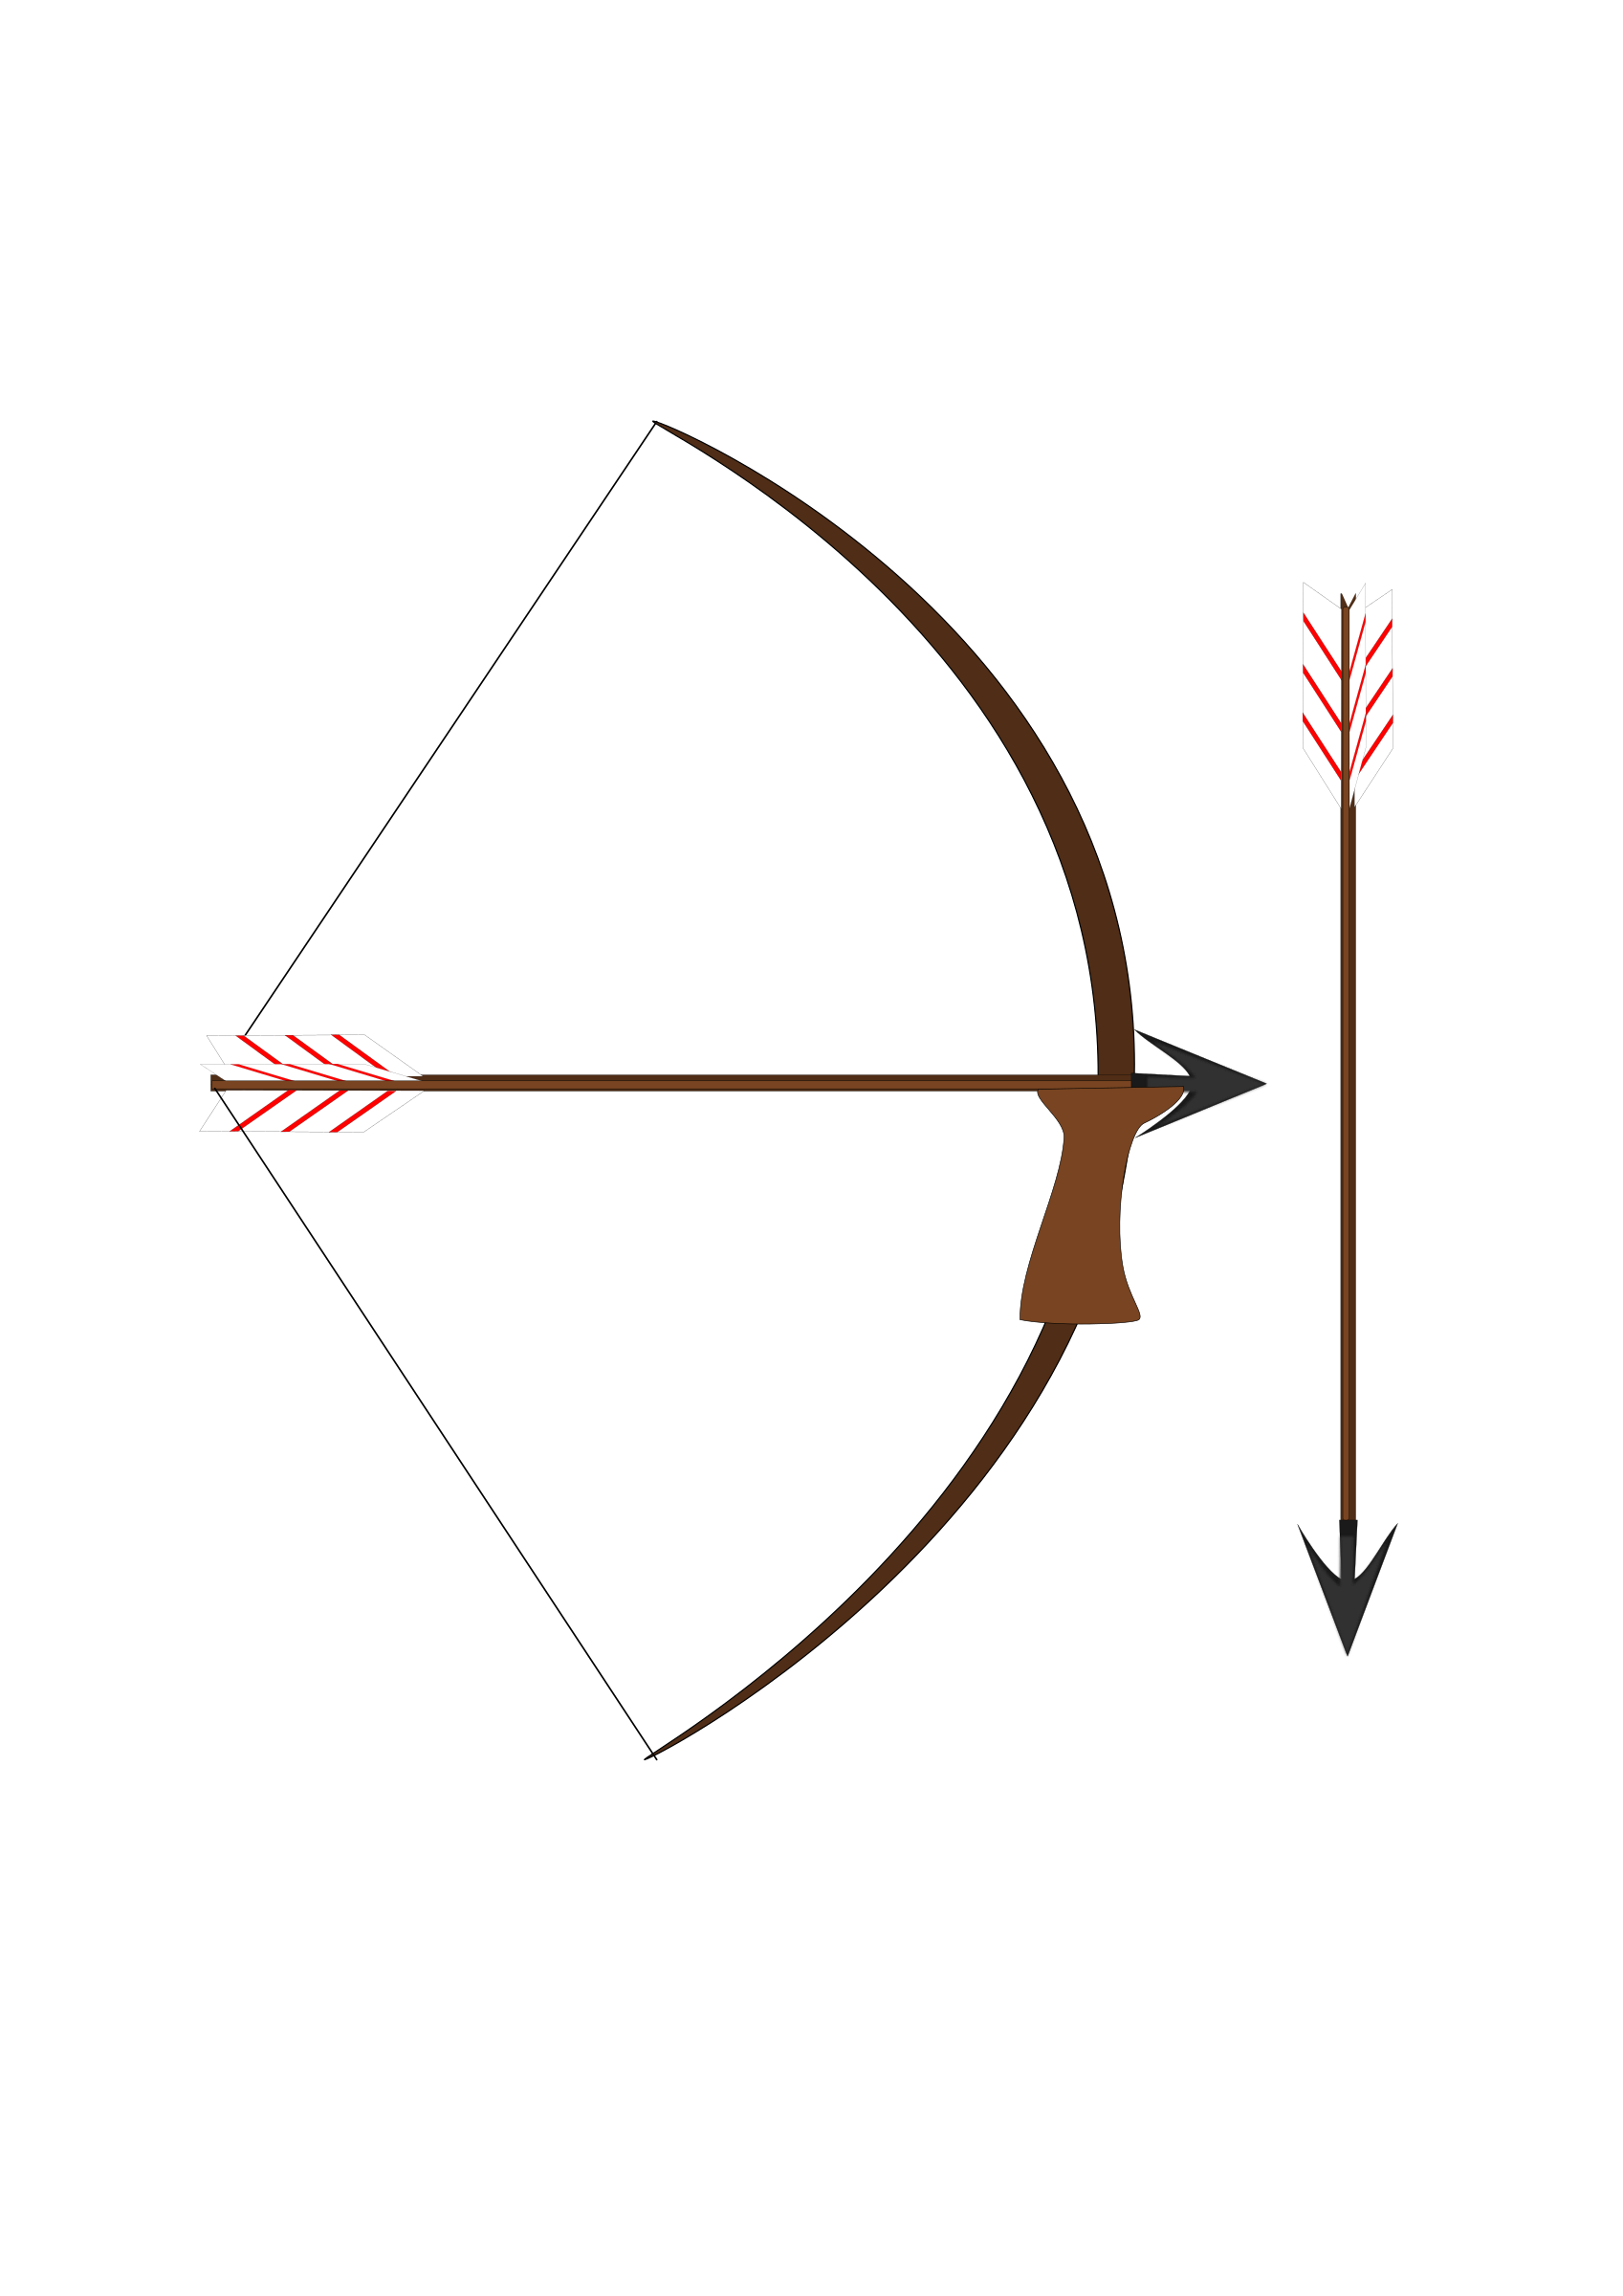 Antique Bow And Arrow Transparent Image